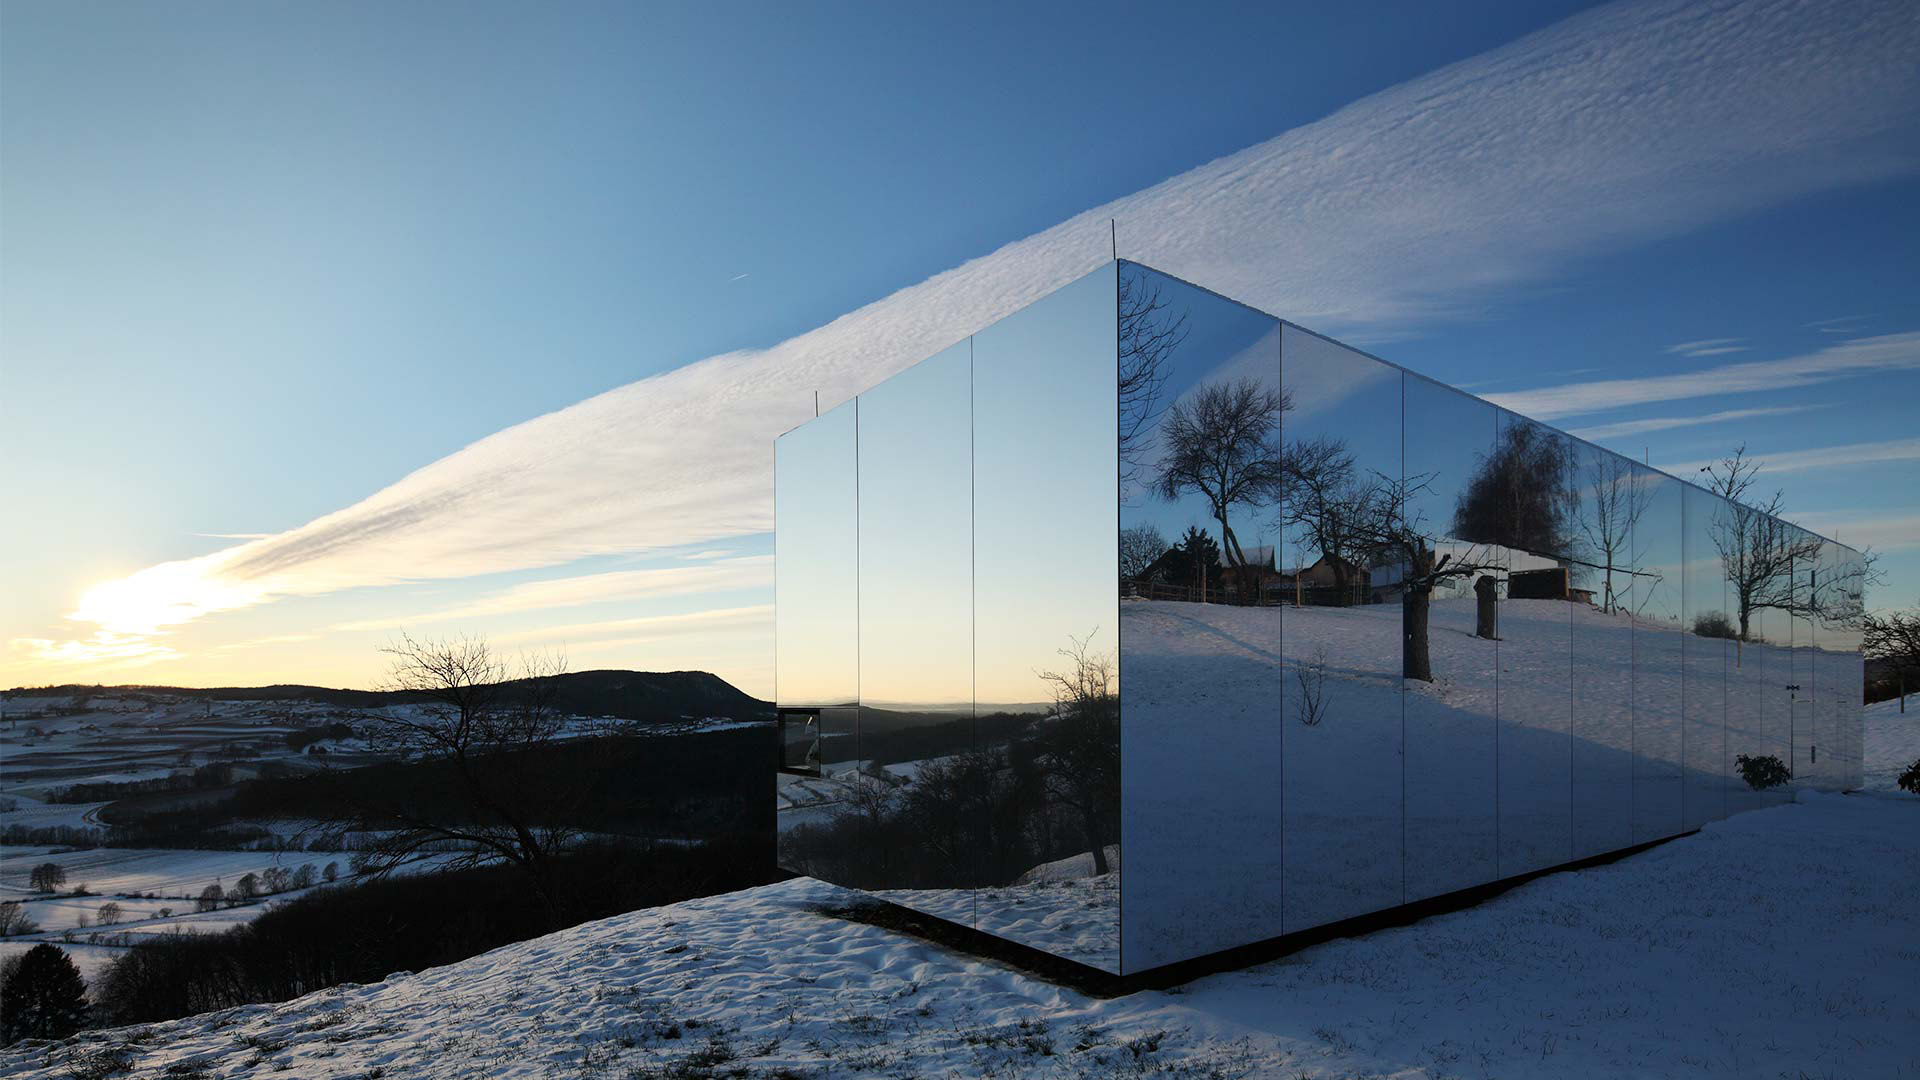 Mirrored Modular Housing Creates Casa Invisible in Austria